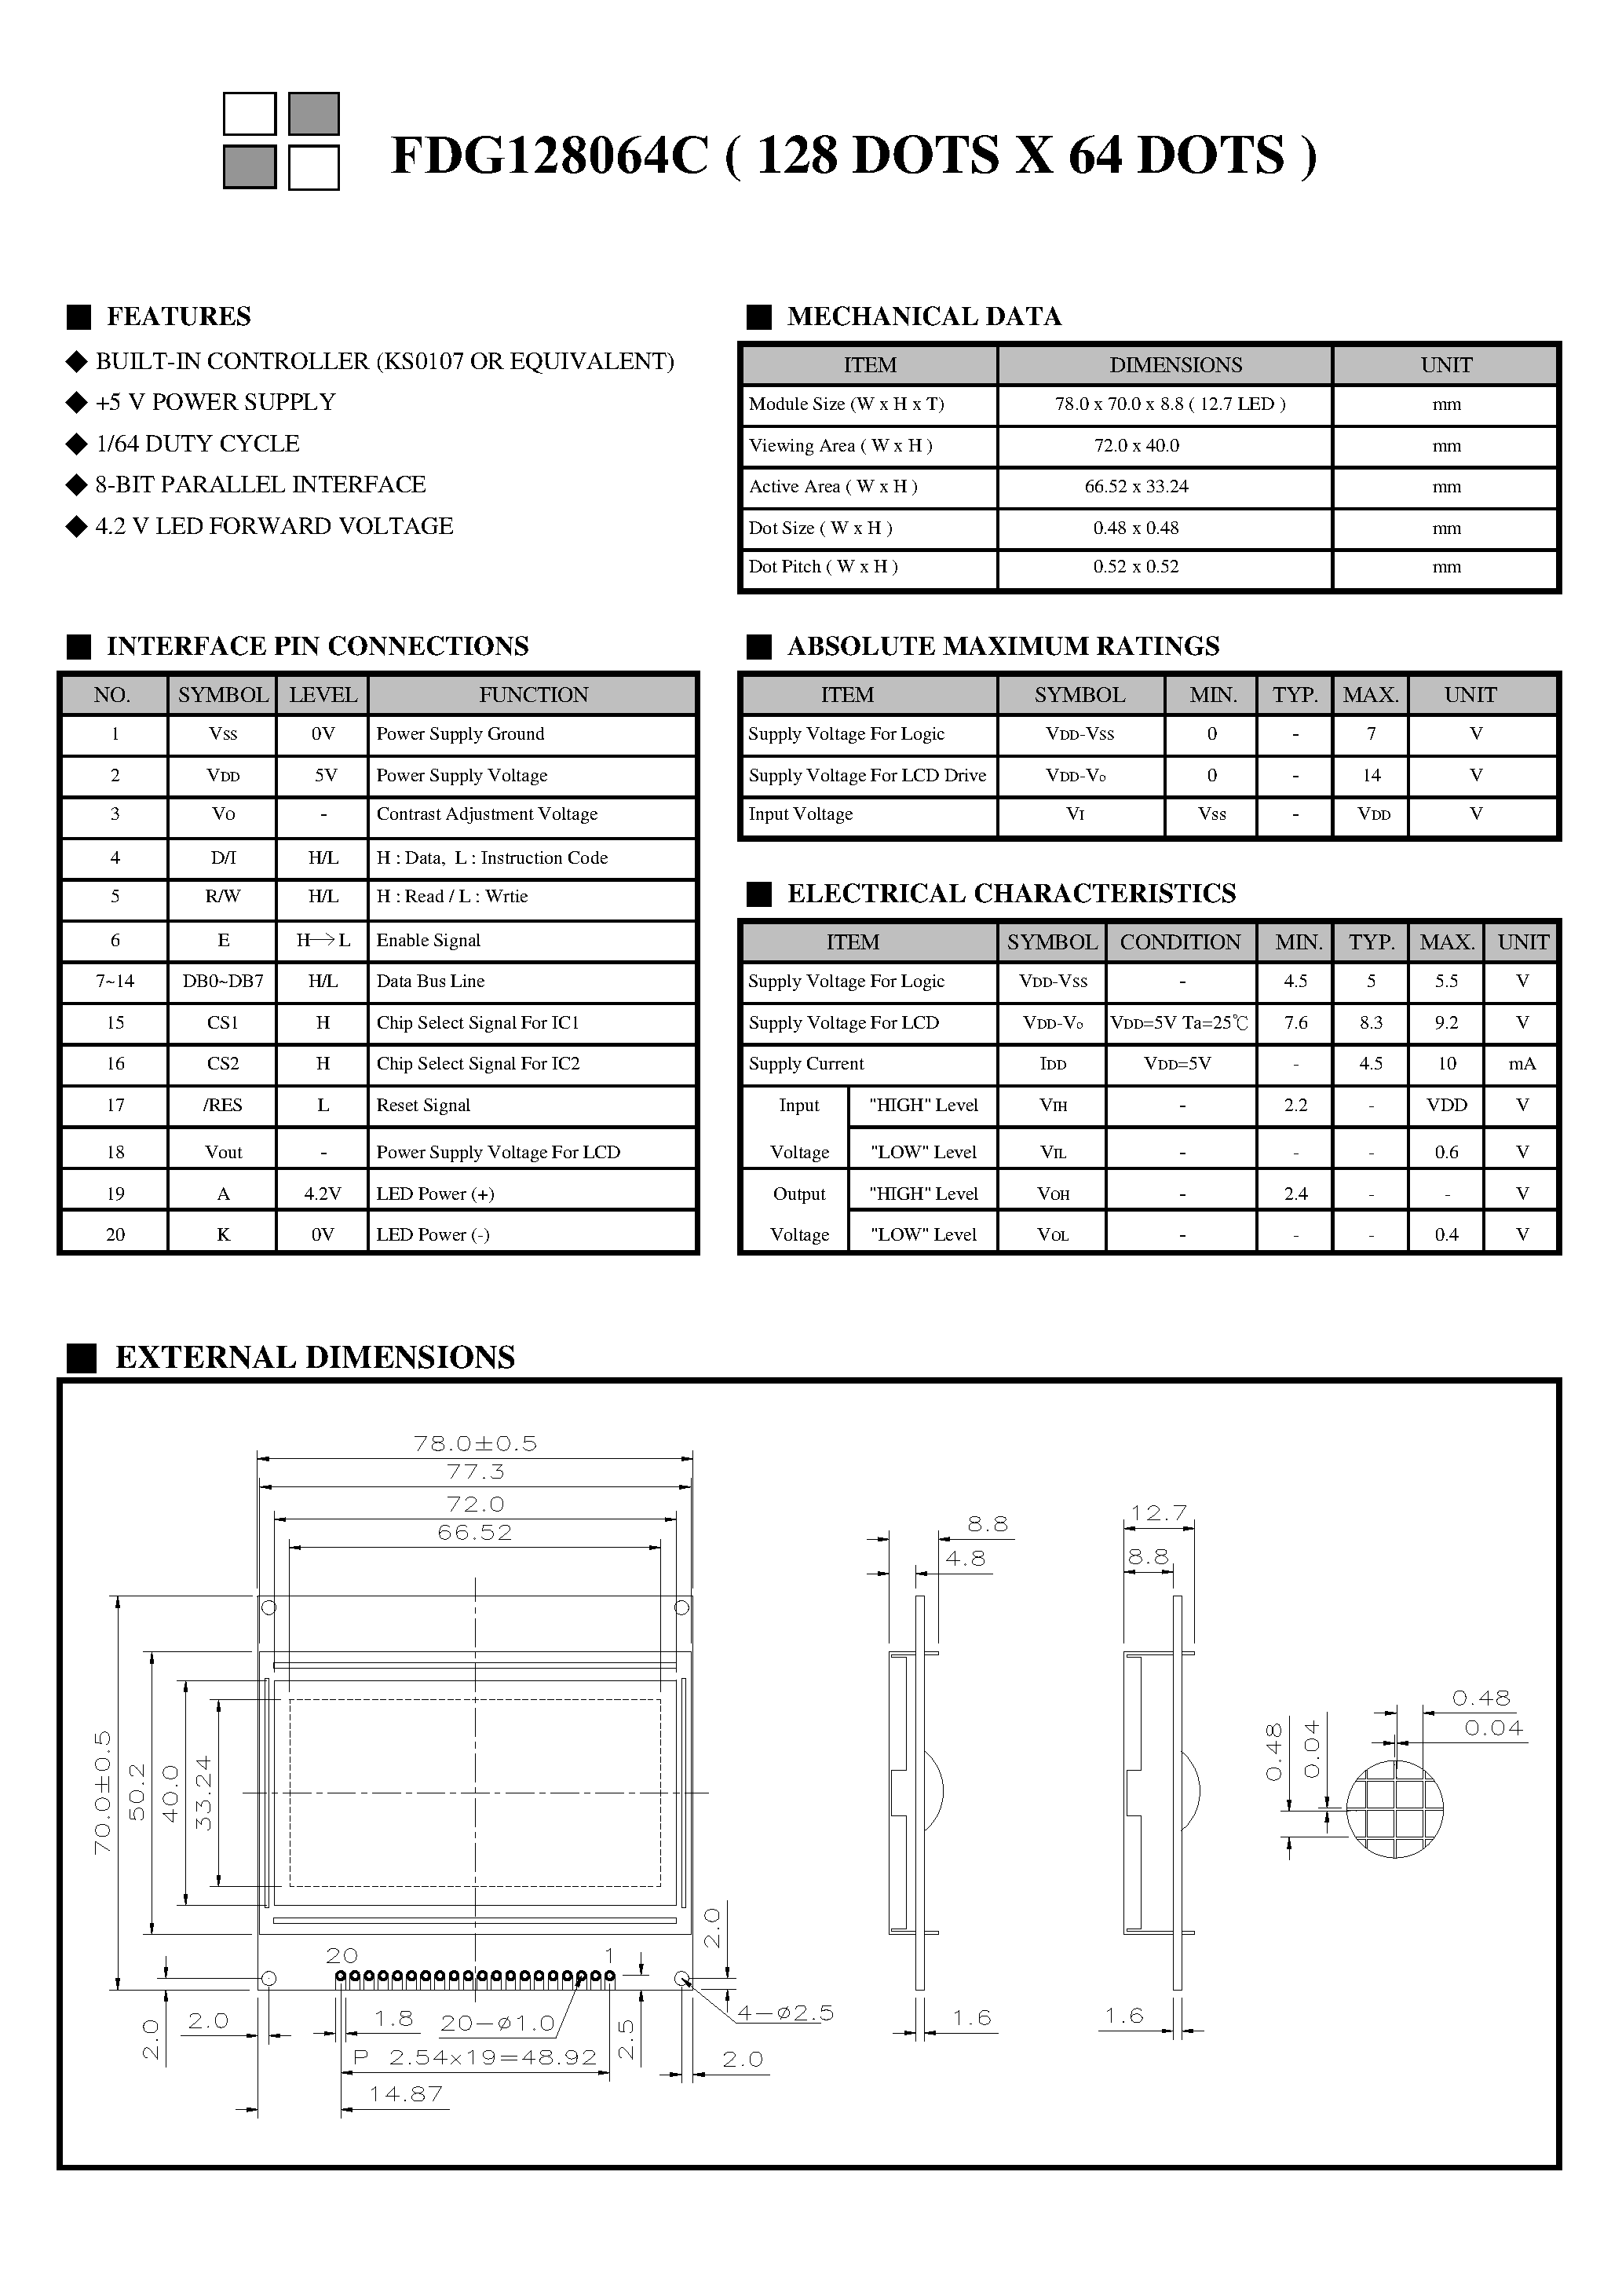 Datasheet FDG128064C - Monochrome Lcd Module page 2